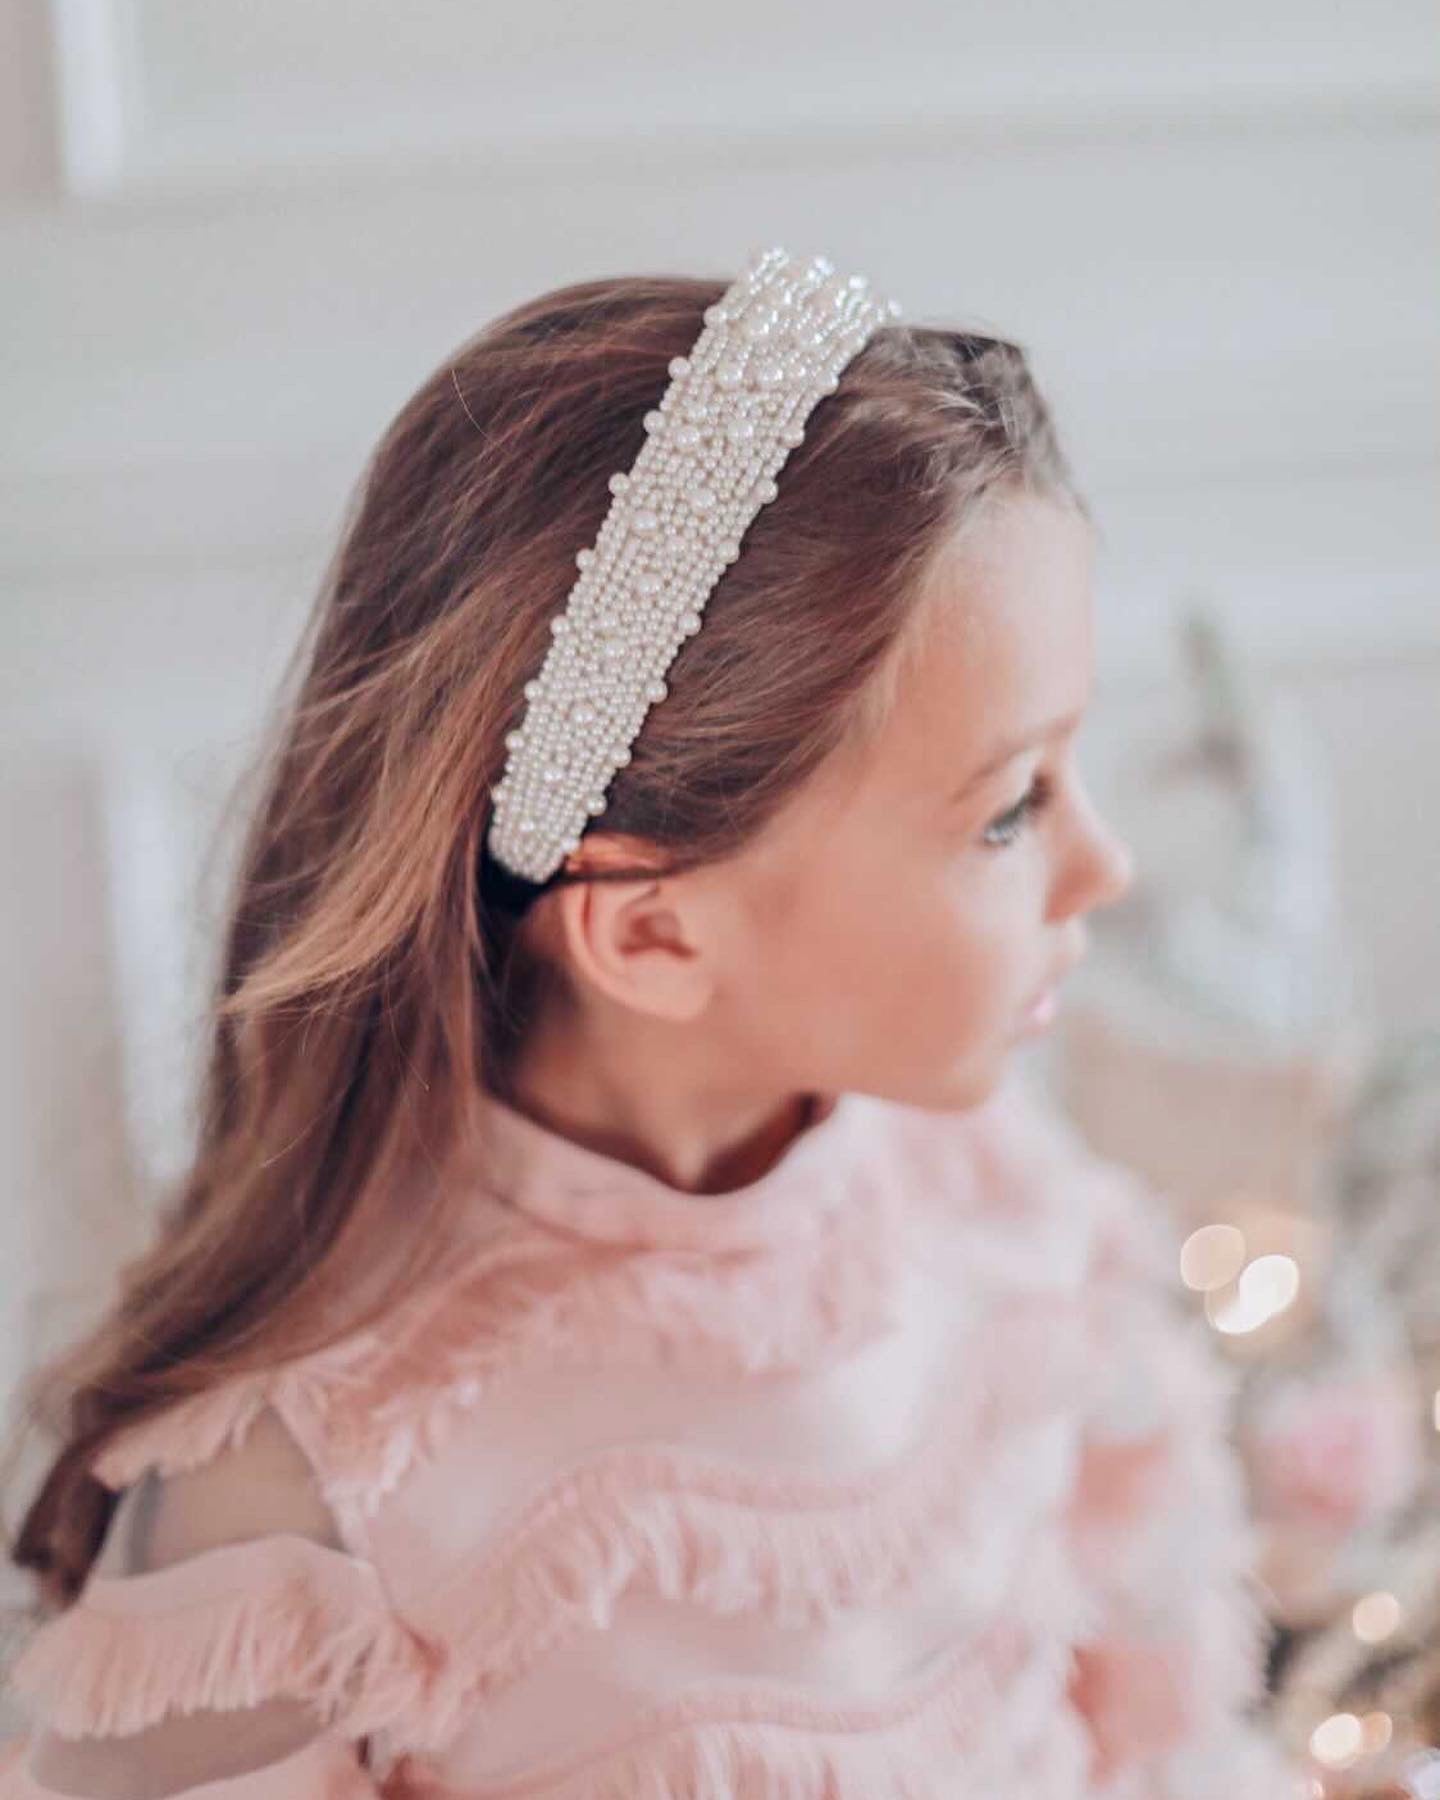 The "Ballerina Pearl” Headband